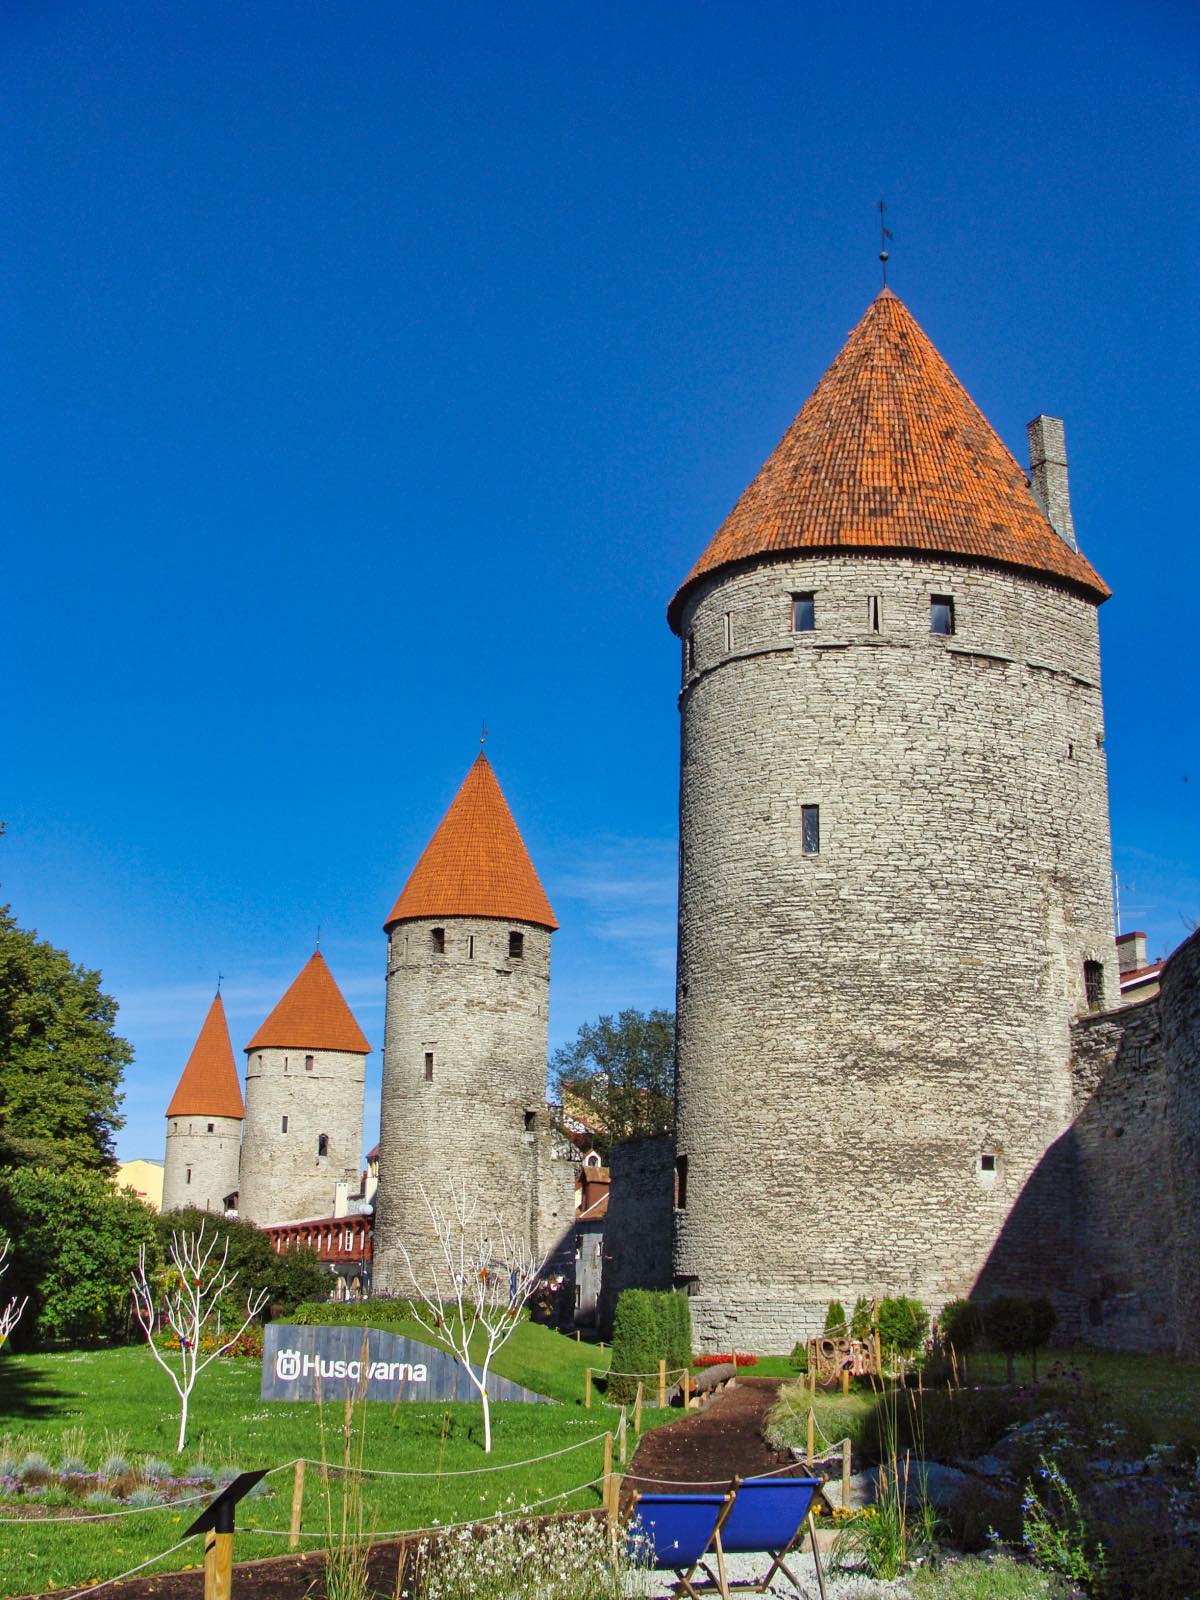 Tallinn Sights Square of Towers